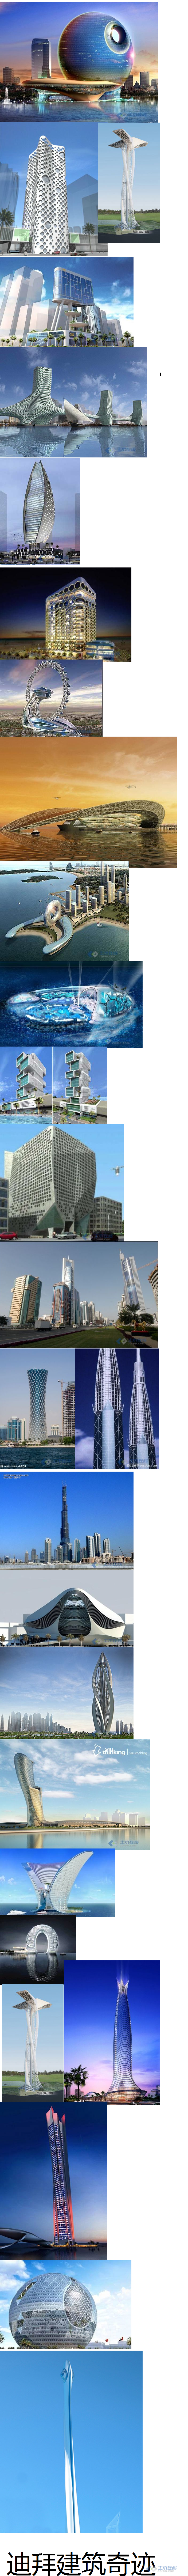 迪拜建筑.png